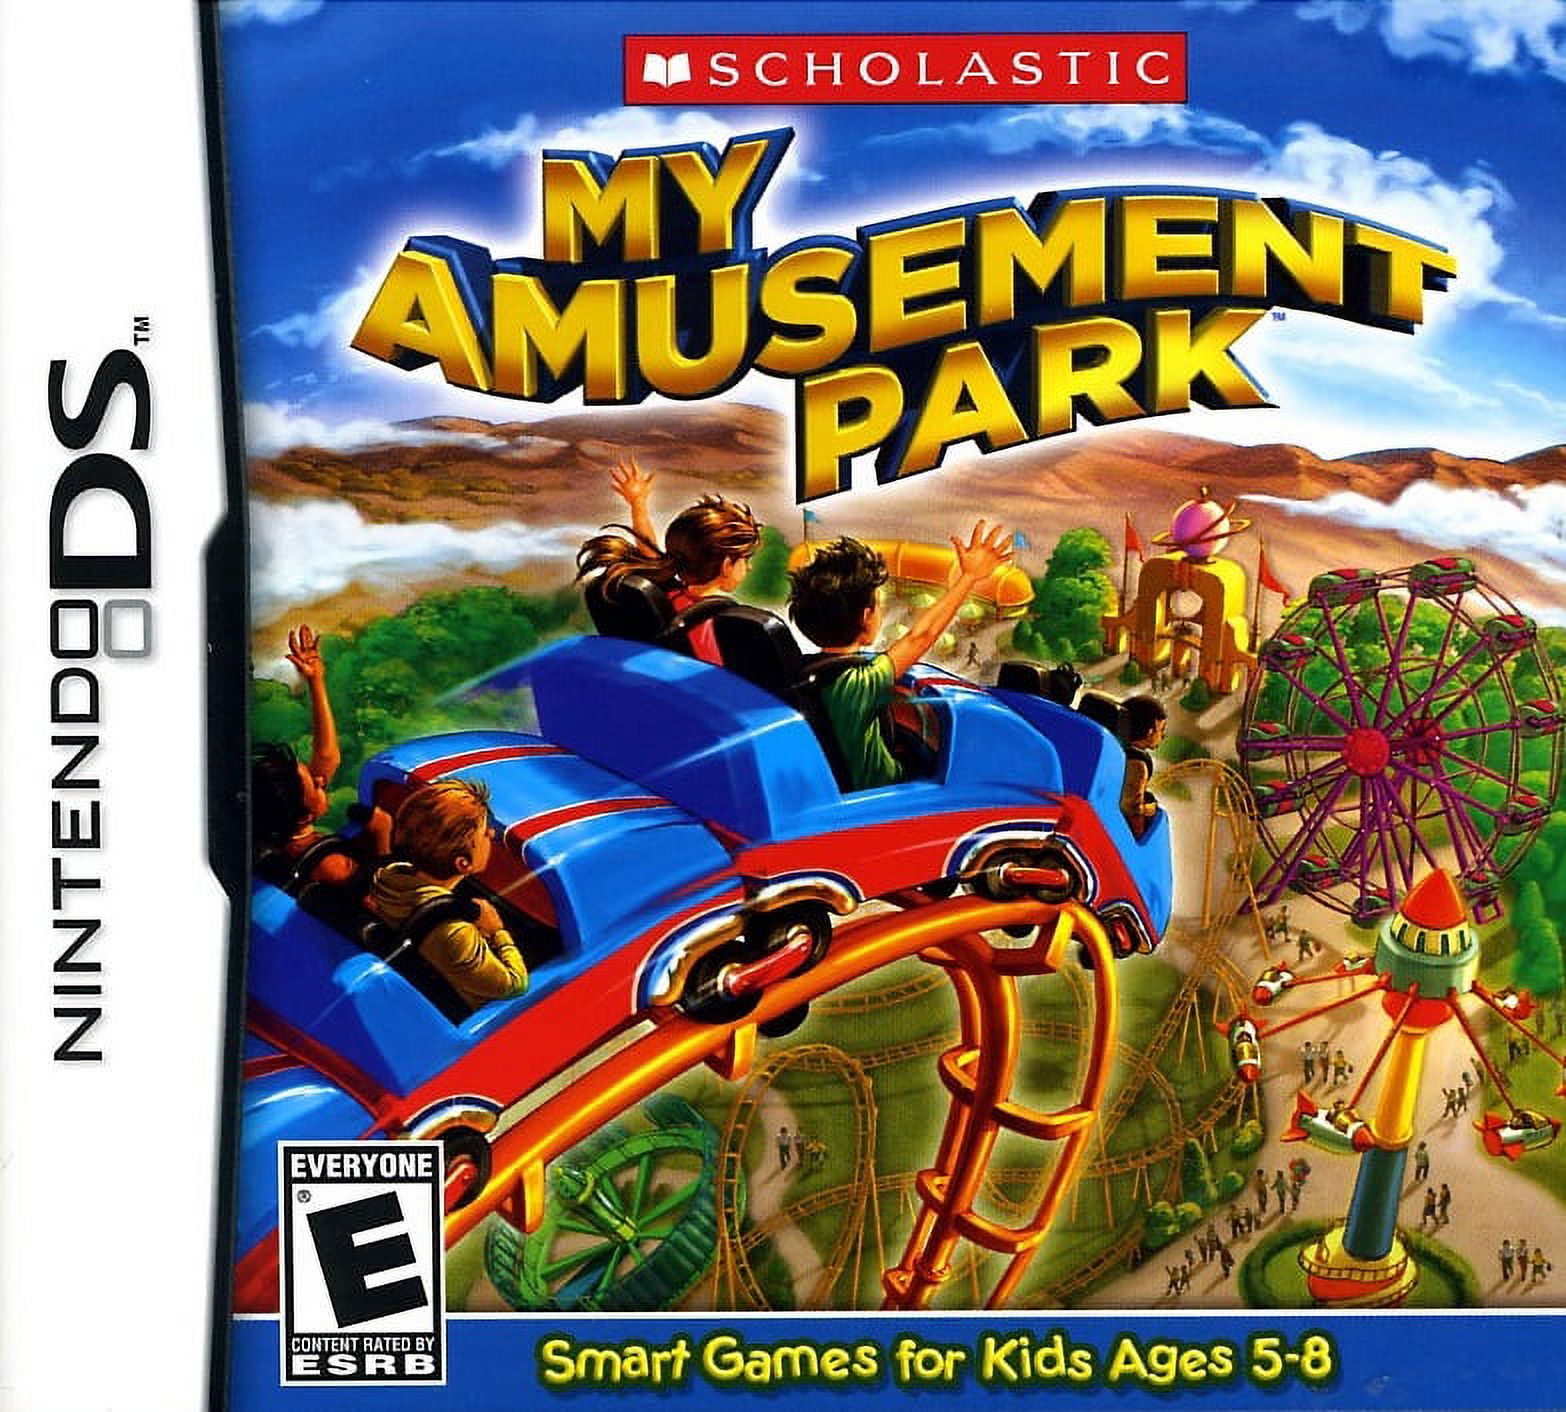 My Amusement Park, Scholastic, Nintendo DS, [Physical], 0-545-30122-X - image 1 of 2